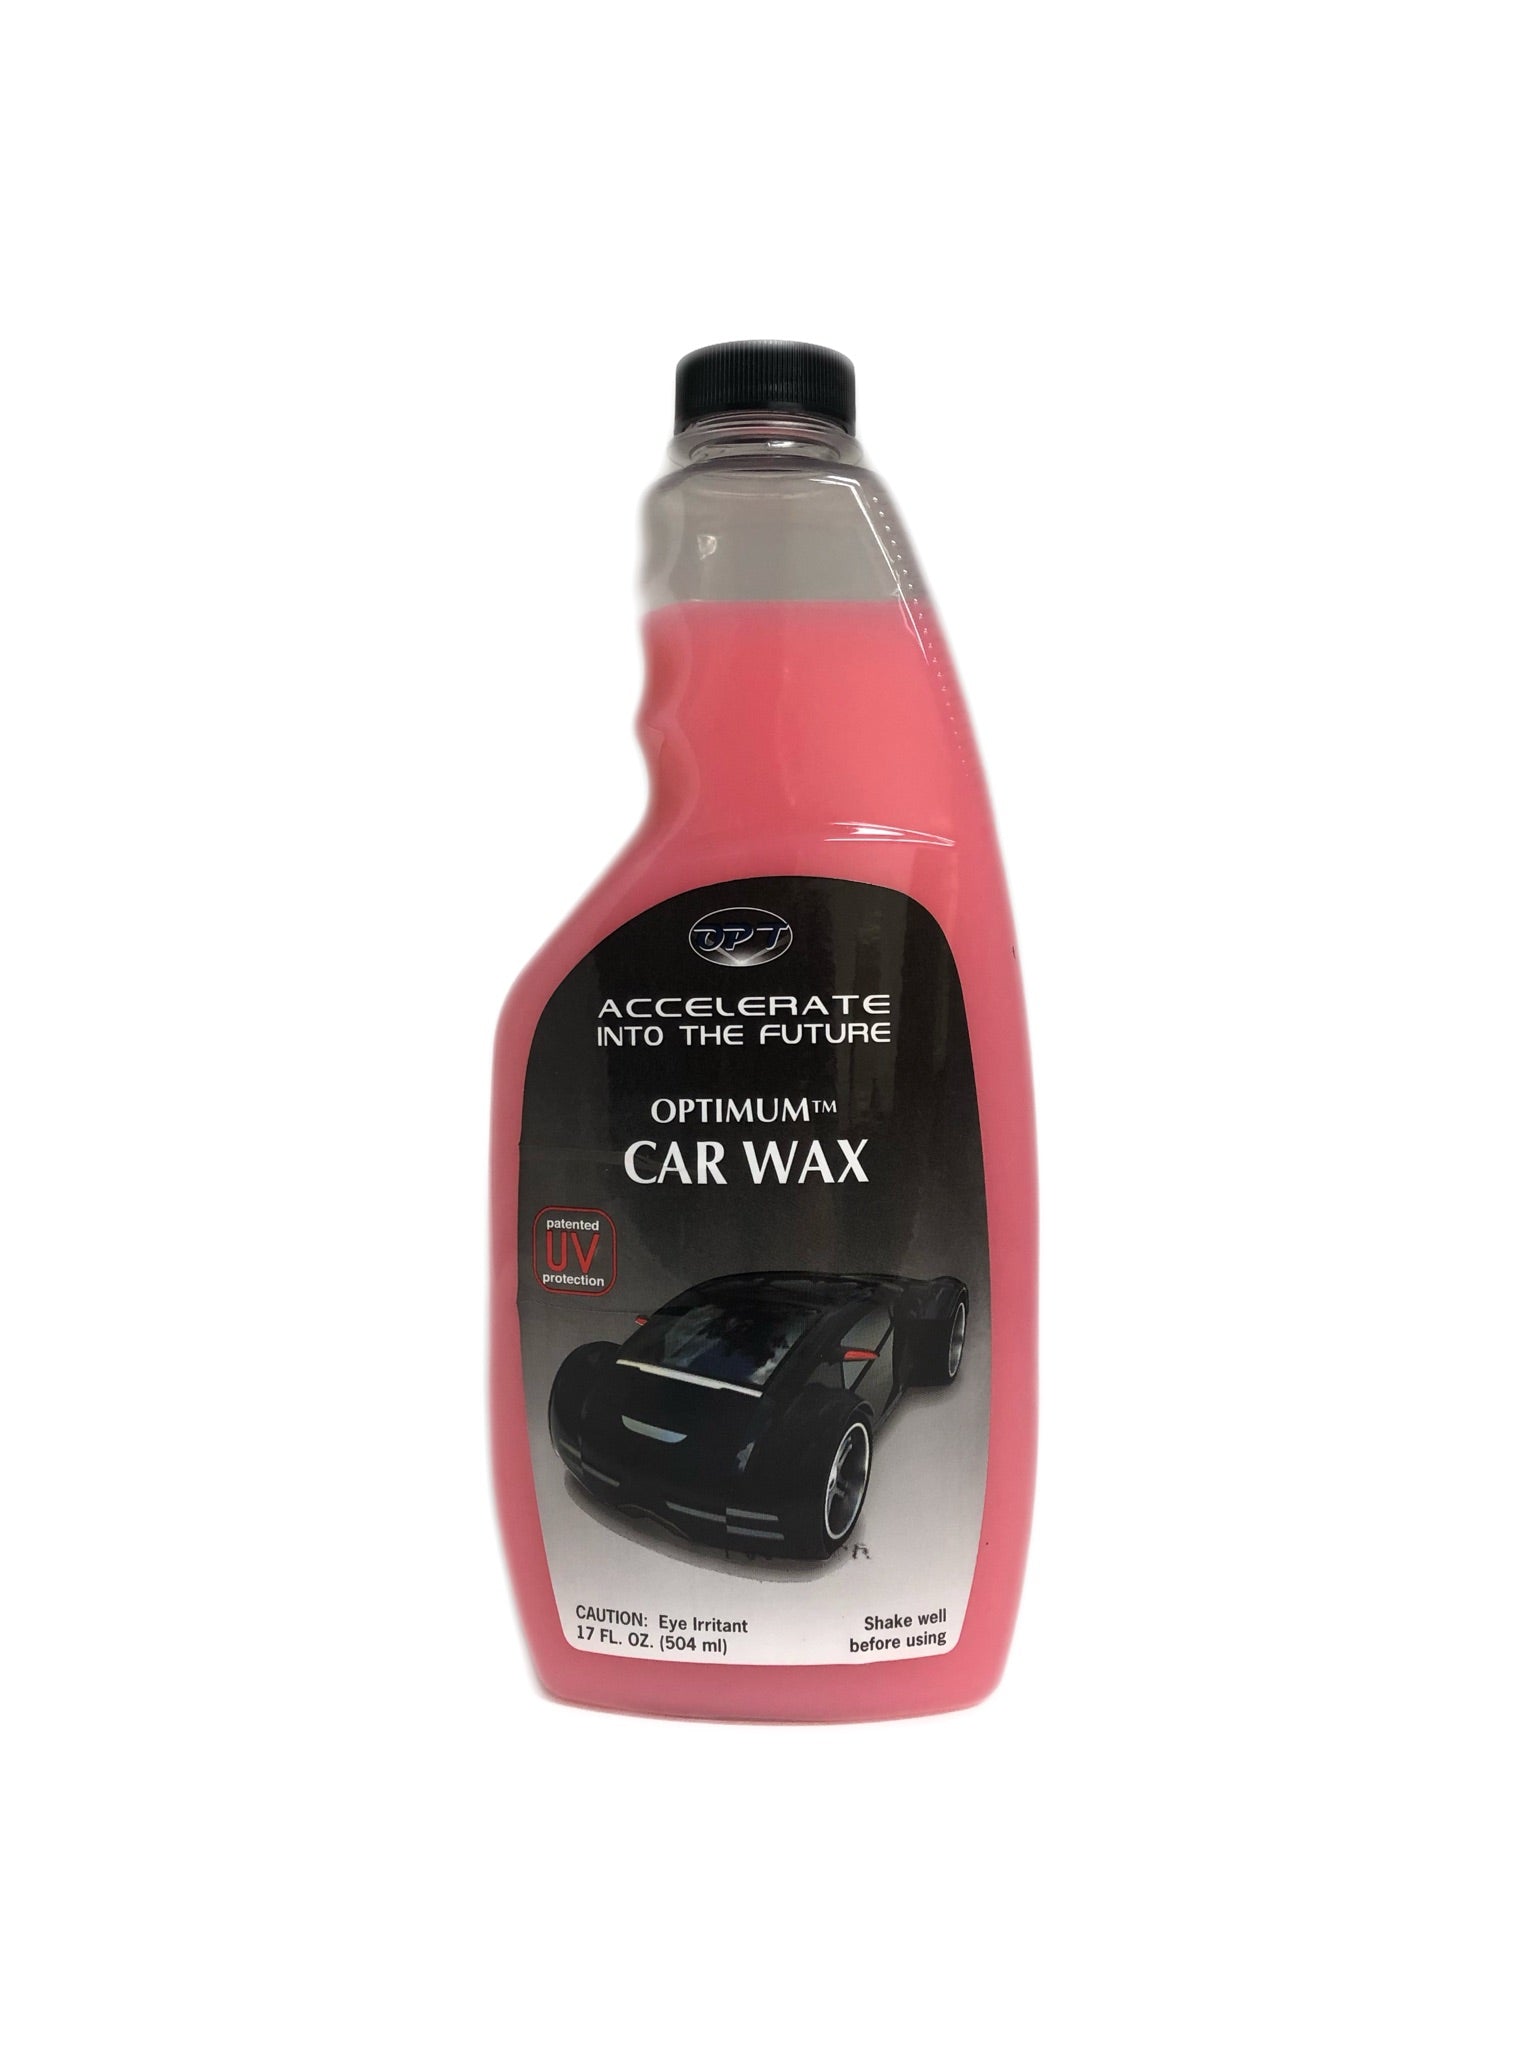 Optimum Car Wax - 17 oz - Detailed Image